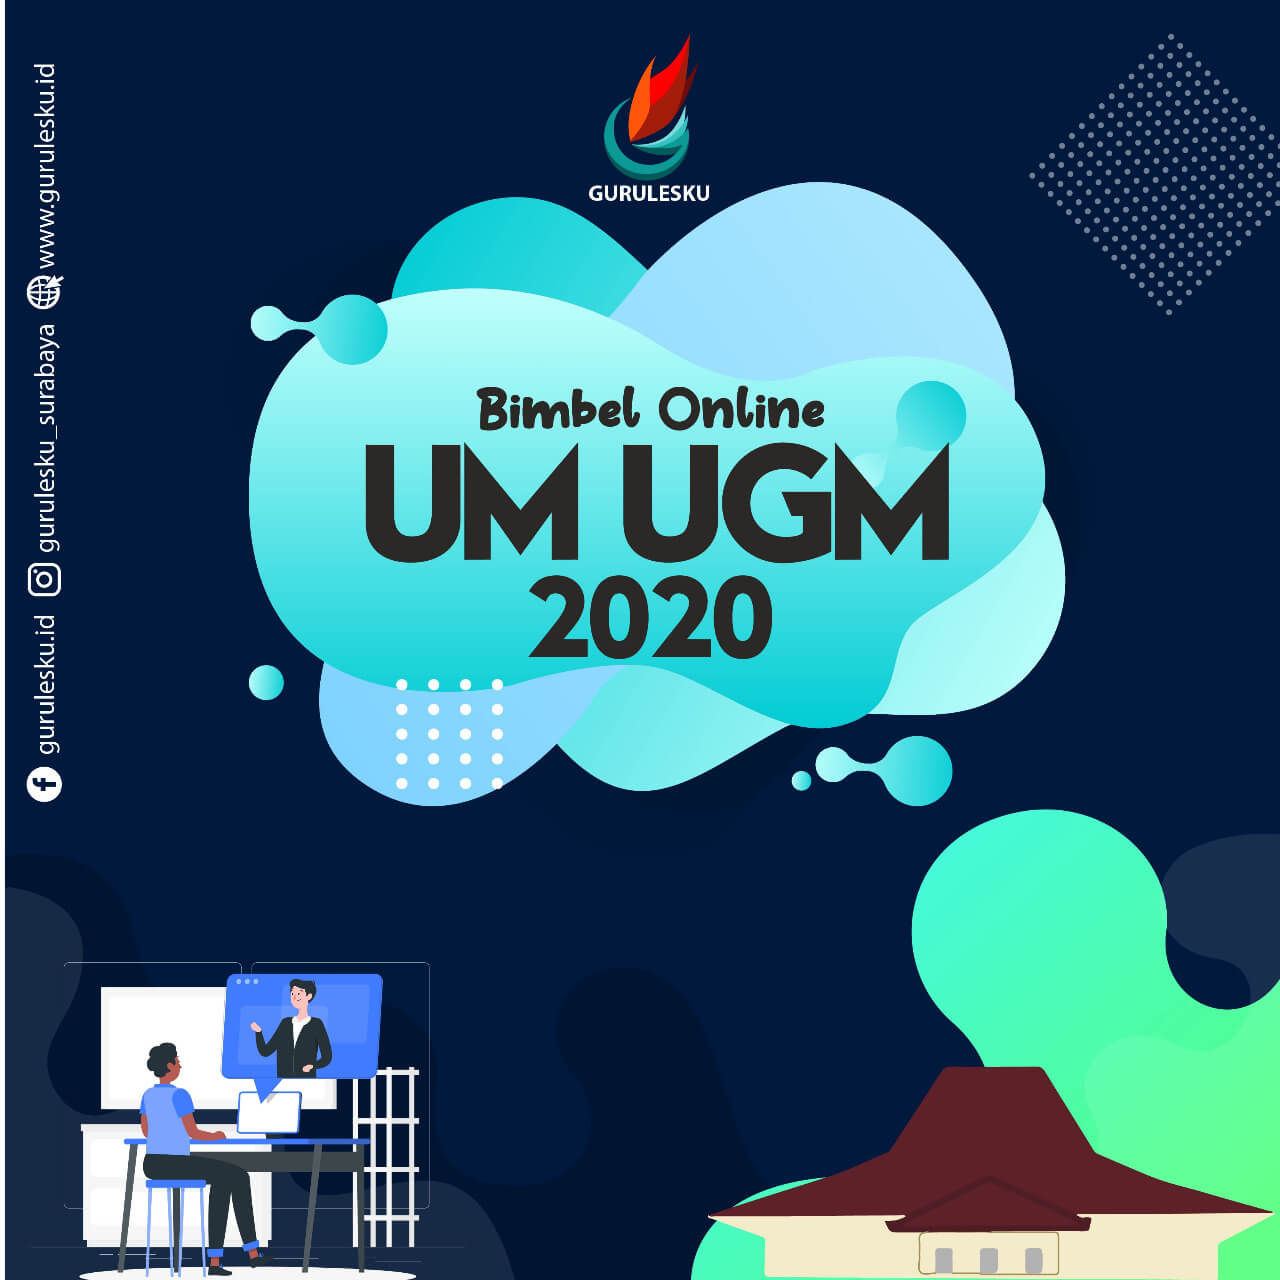 Bimbel Online UM UGM Surabaya 2020